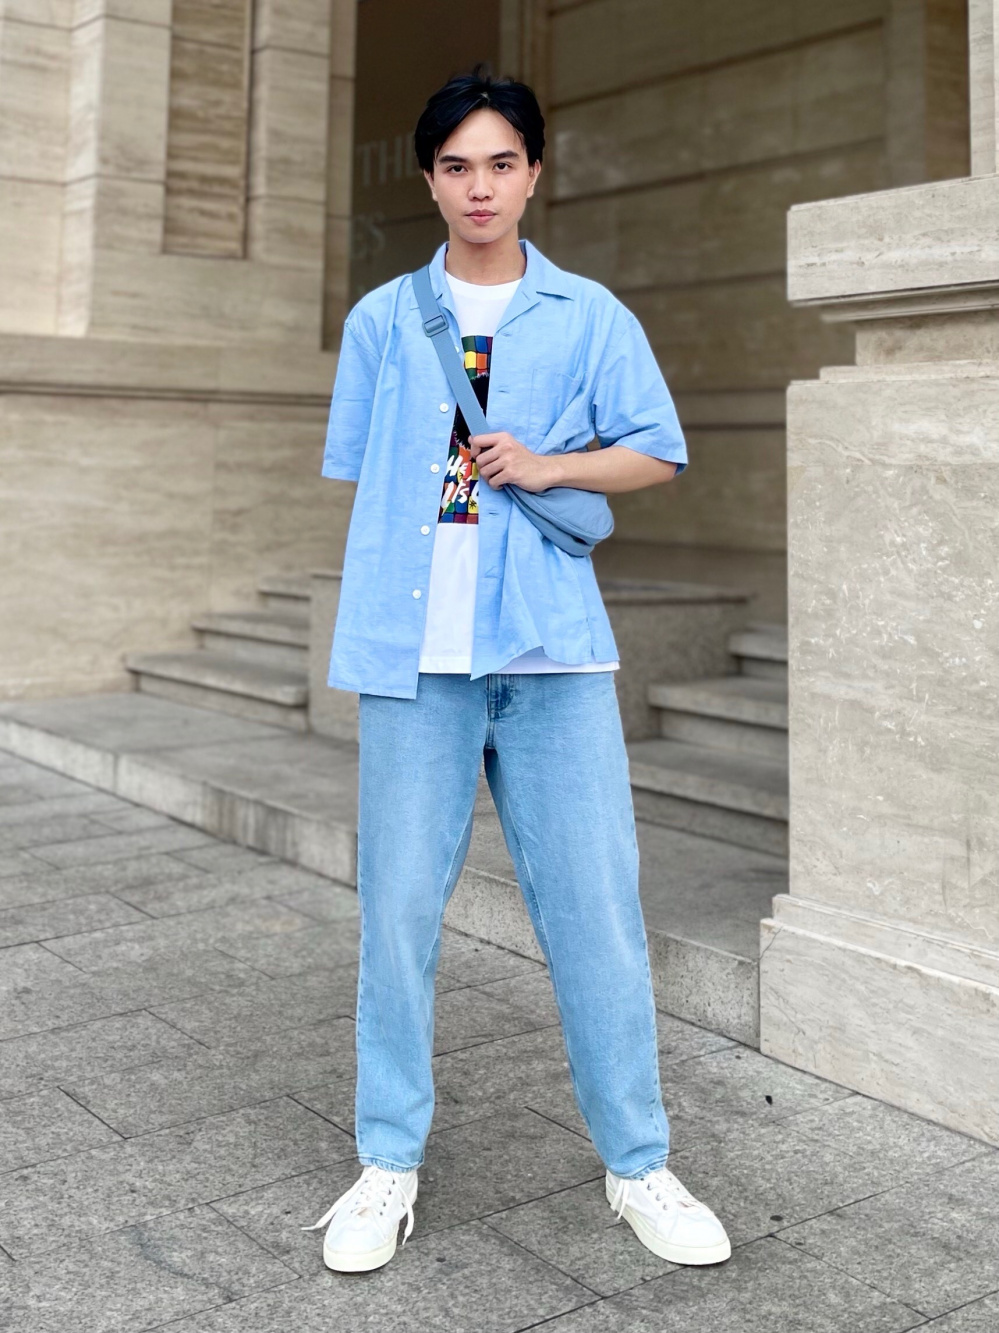 Light Blue Pant With Matching Shirt Ideas, Men Fashion